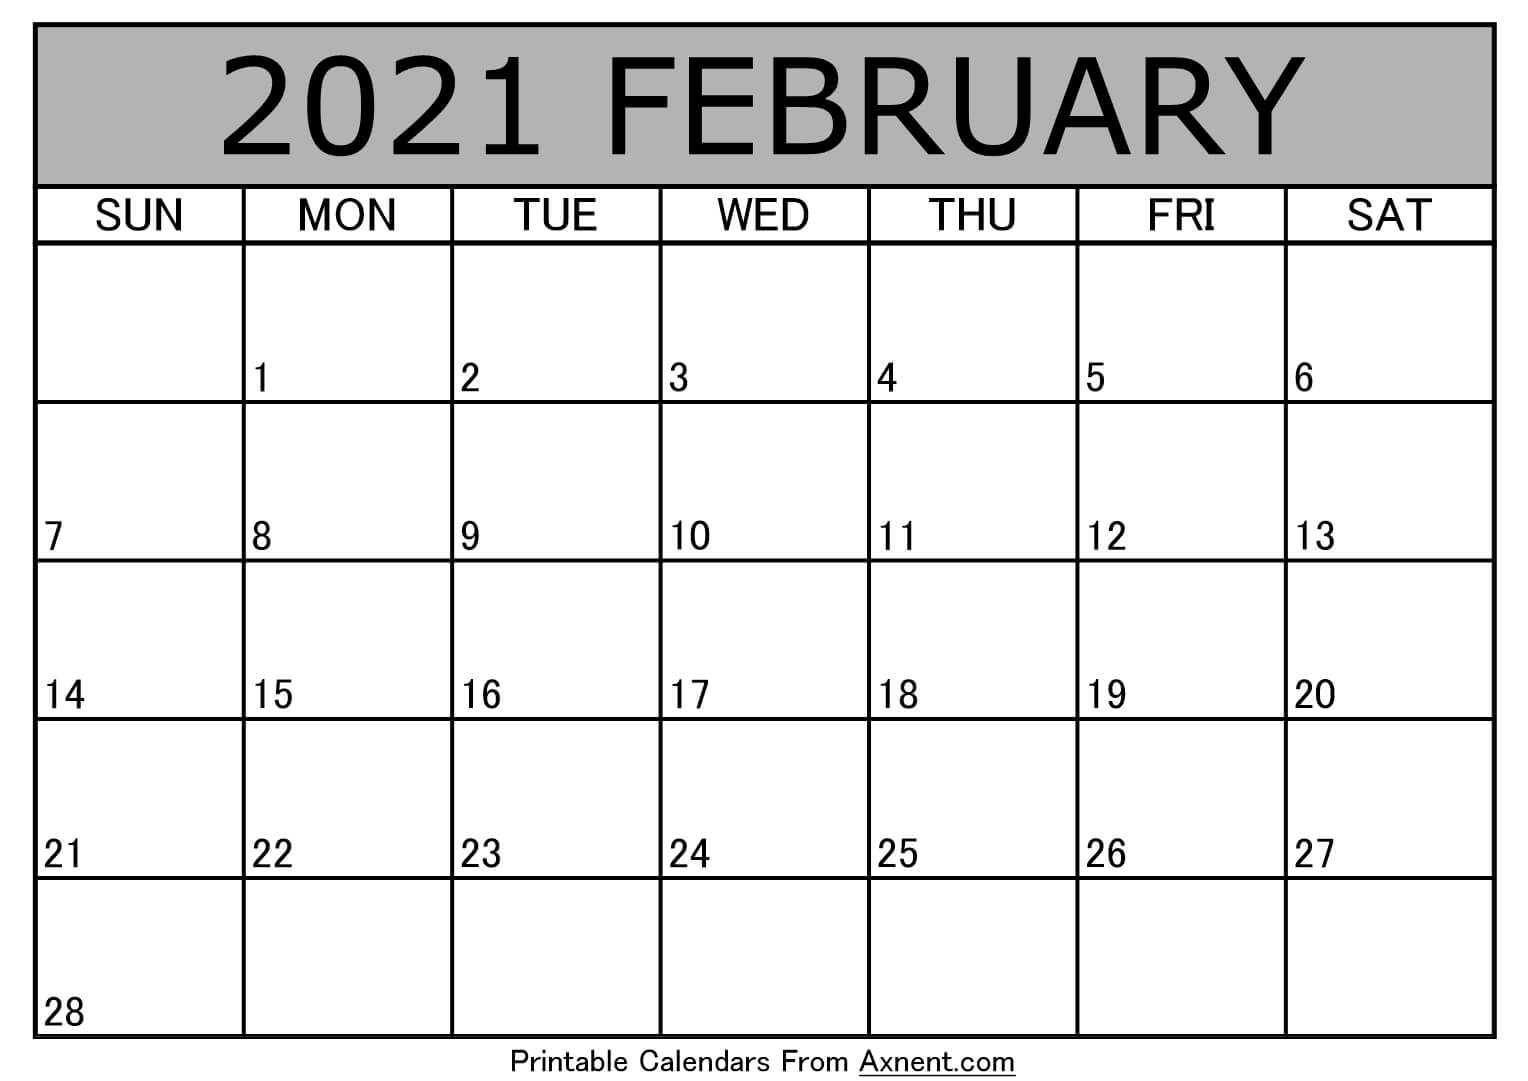 Printable February 2021 Calendar Template - Print Now